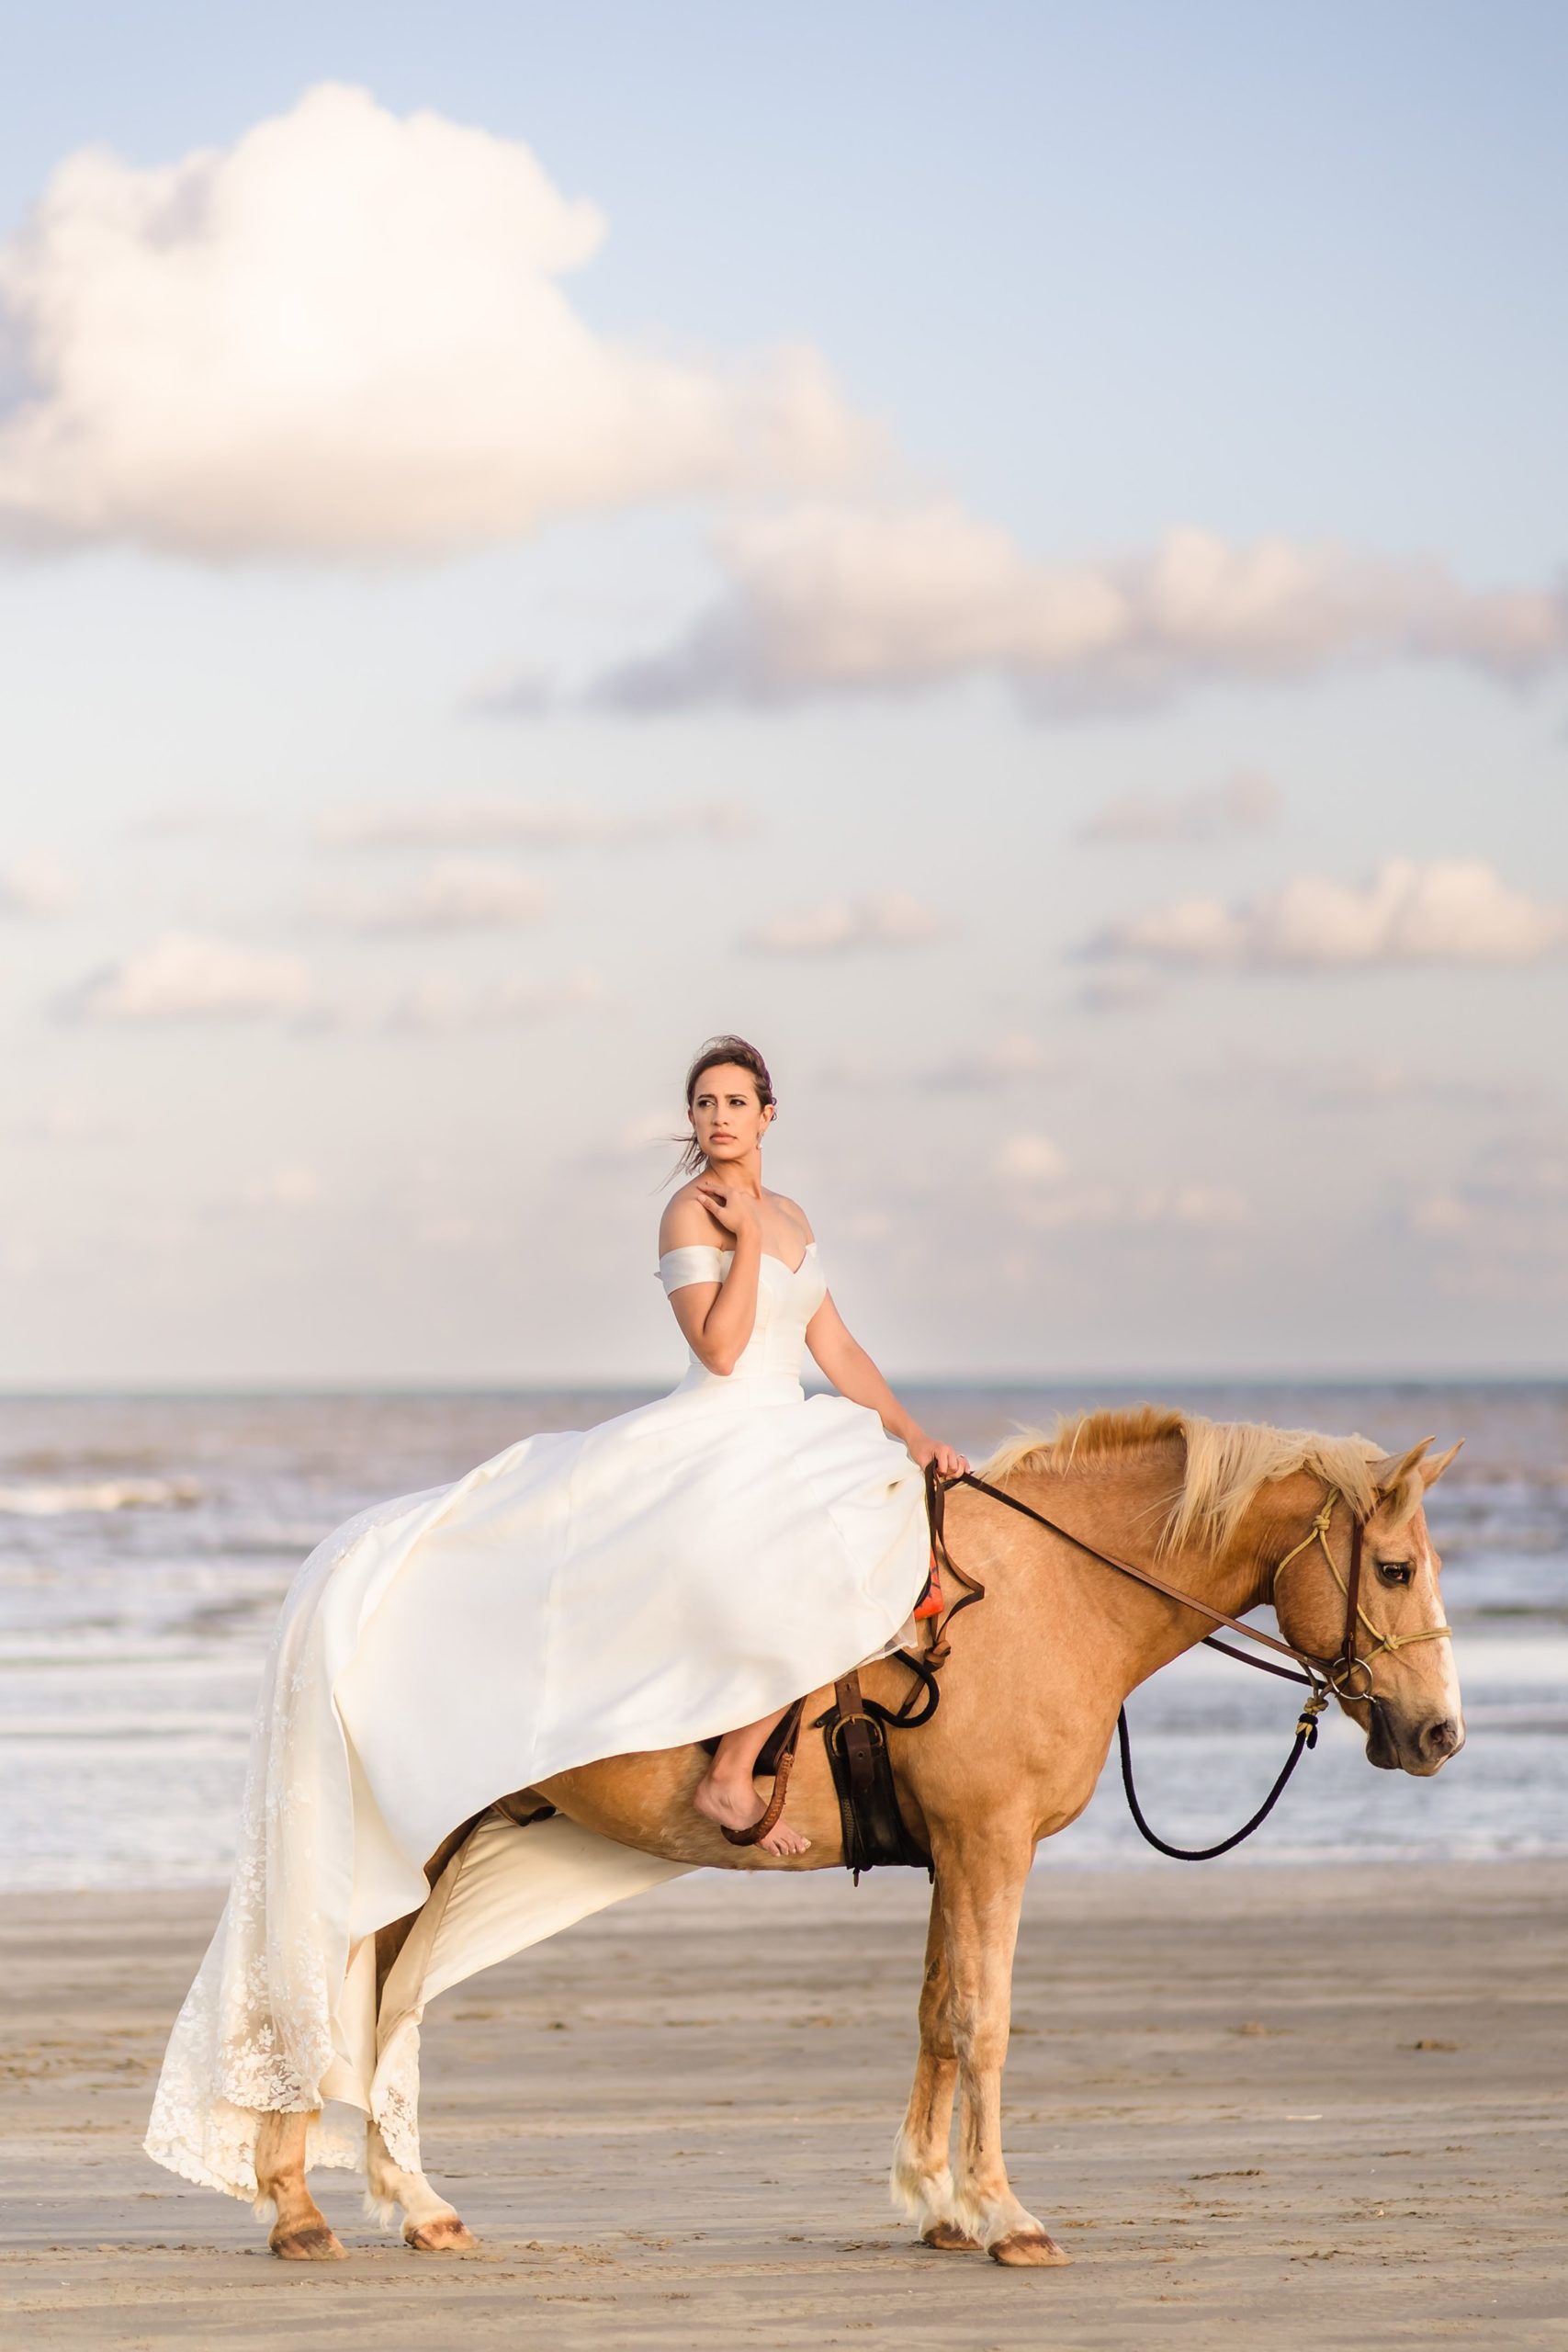 Bridal Portrait during an elopement at Galveston Beach in Texas.